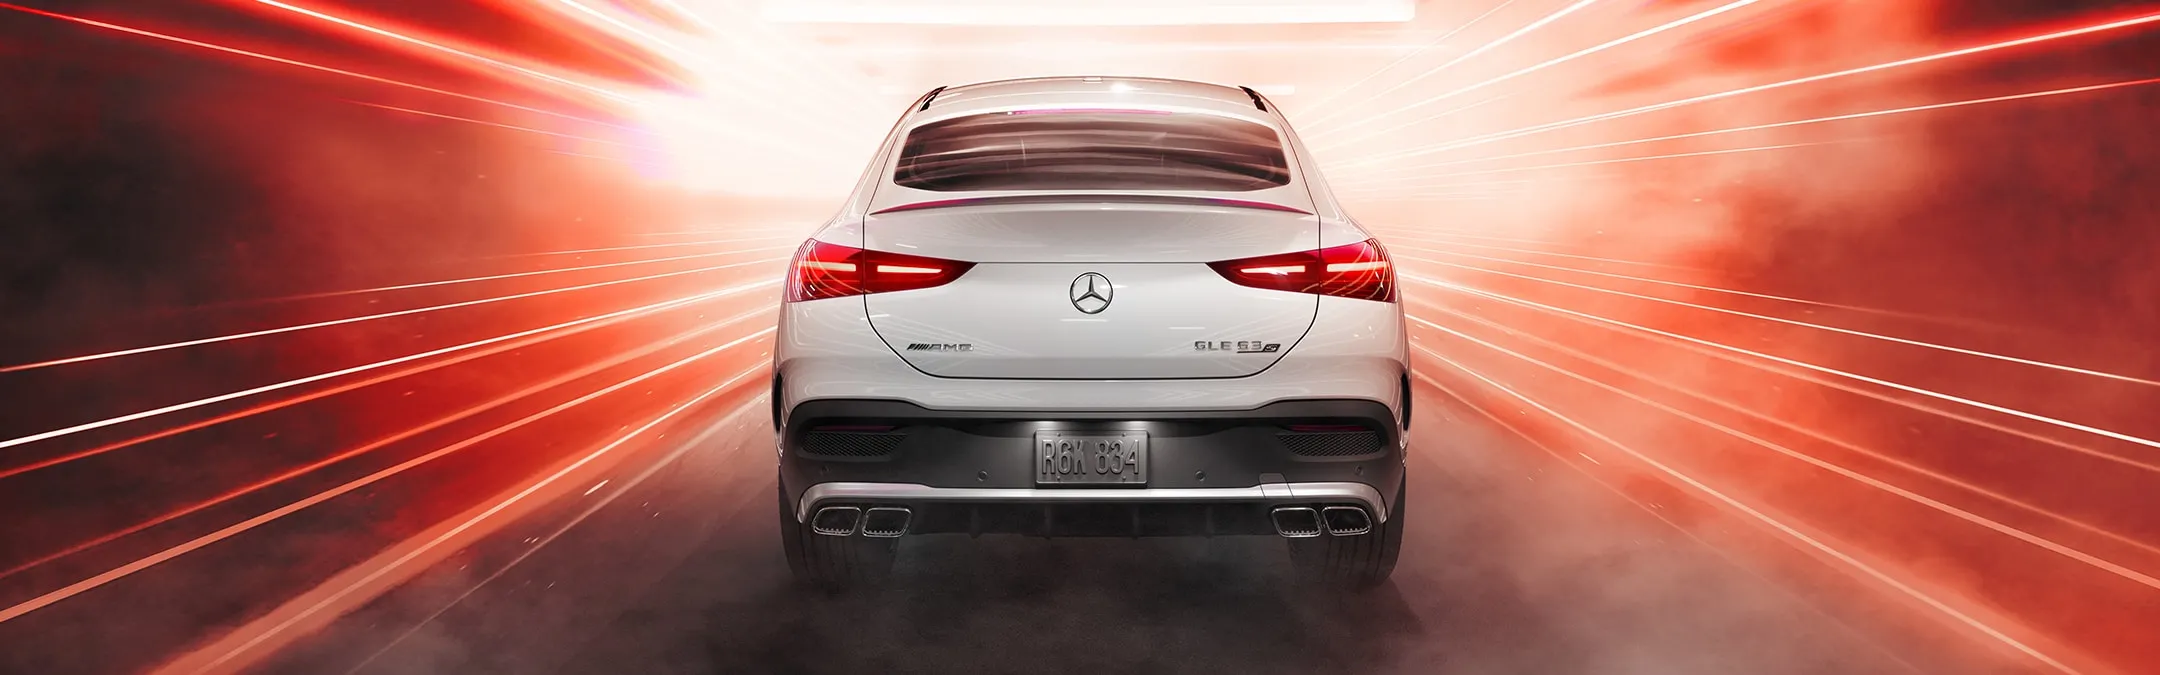 Mercedes-AMG Homepage